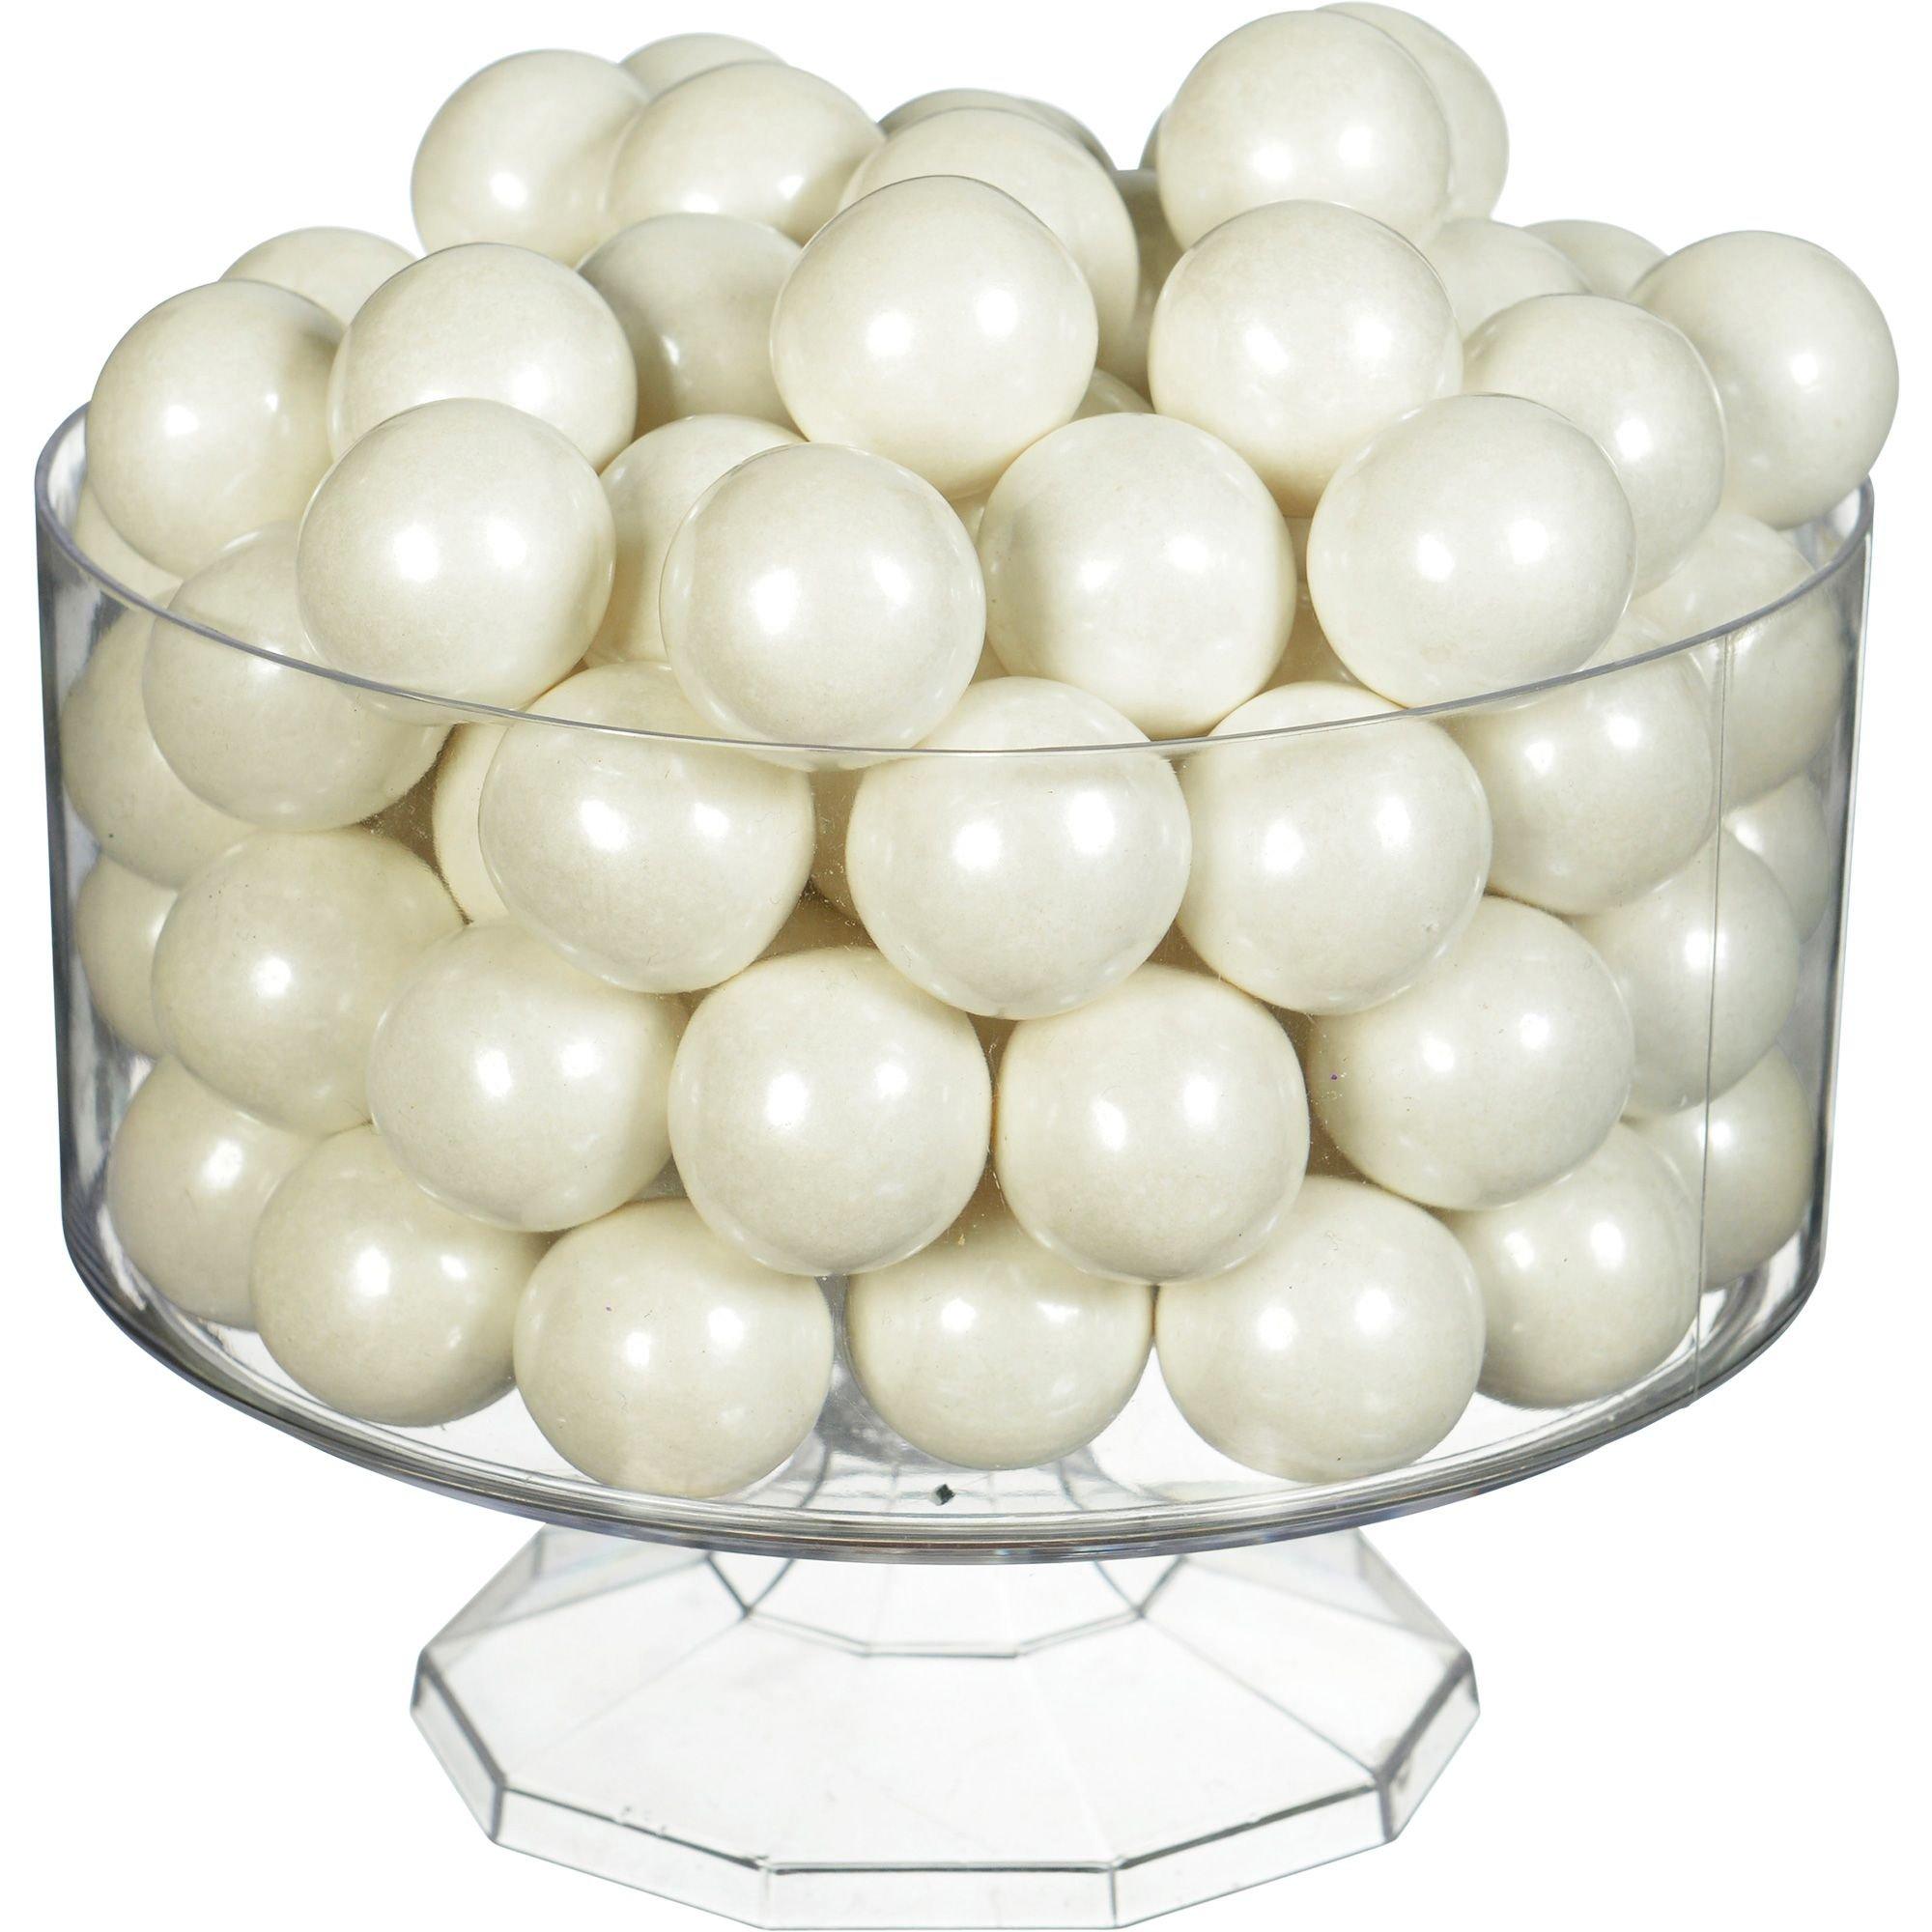 Baseball Gumballs 1 pound bulk white gum balls, 1 pound - Harris Teeter